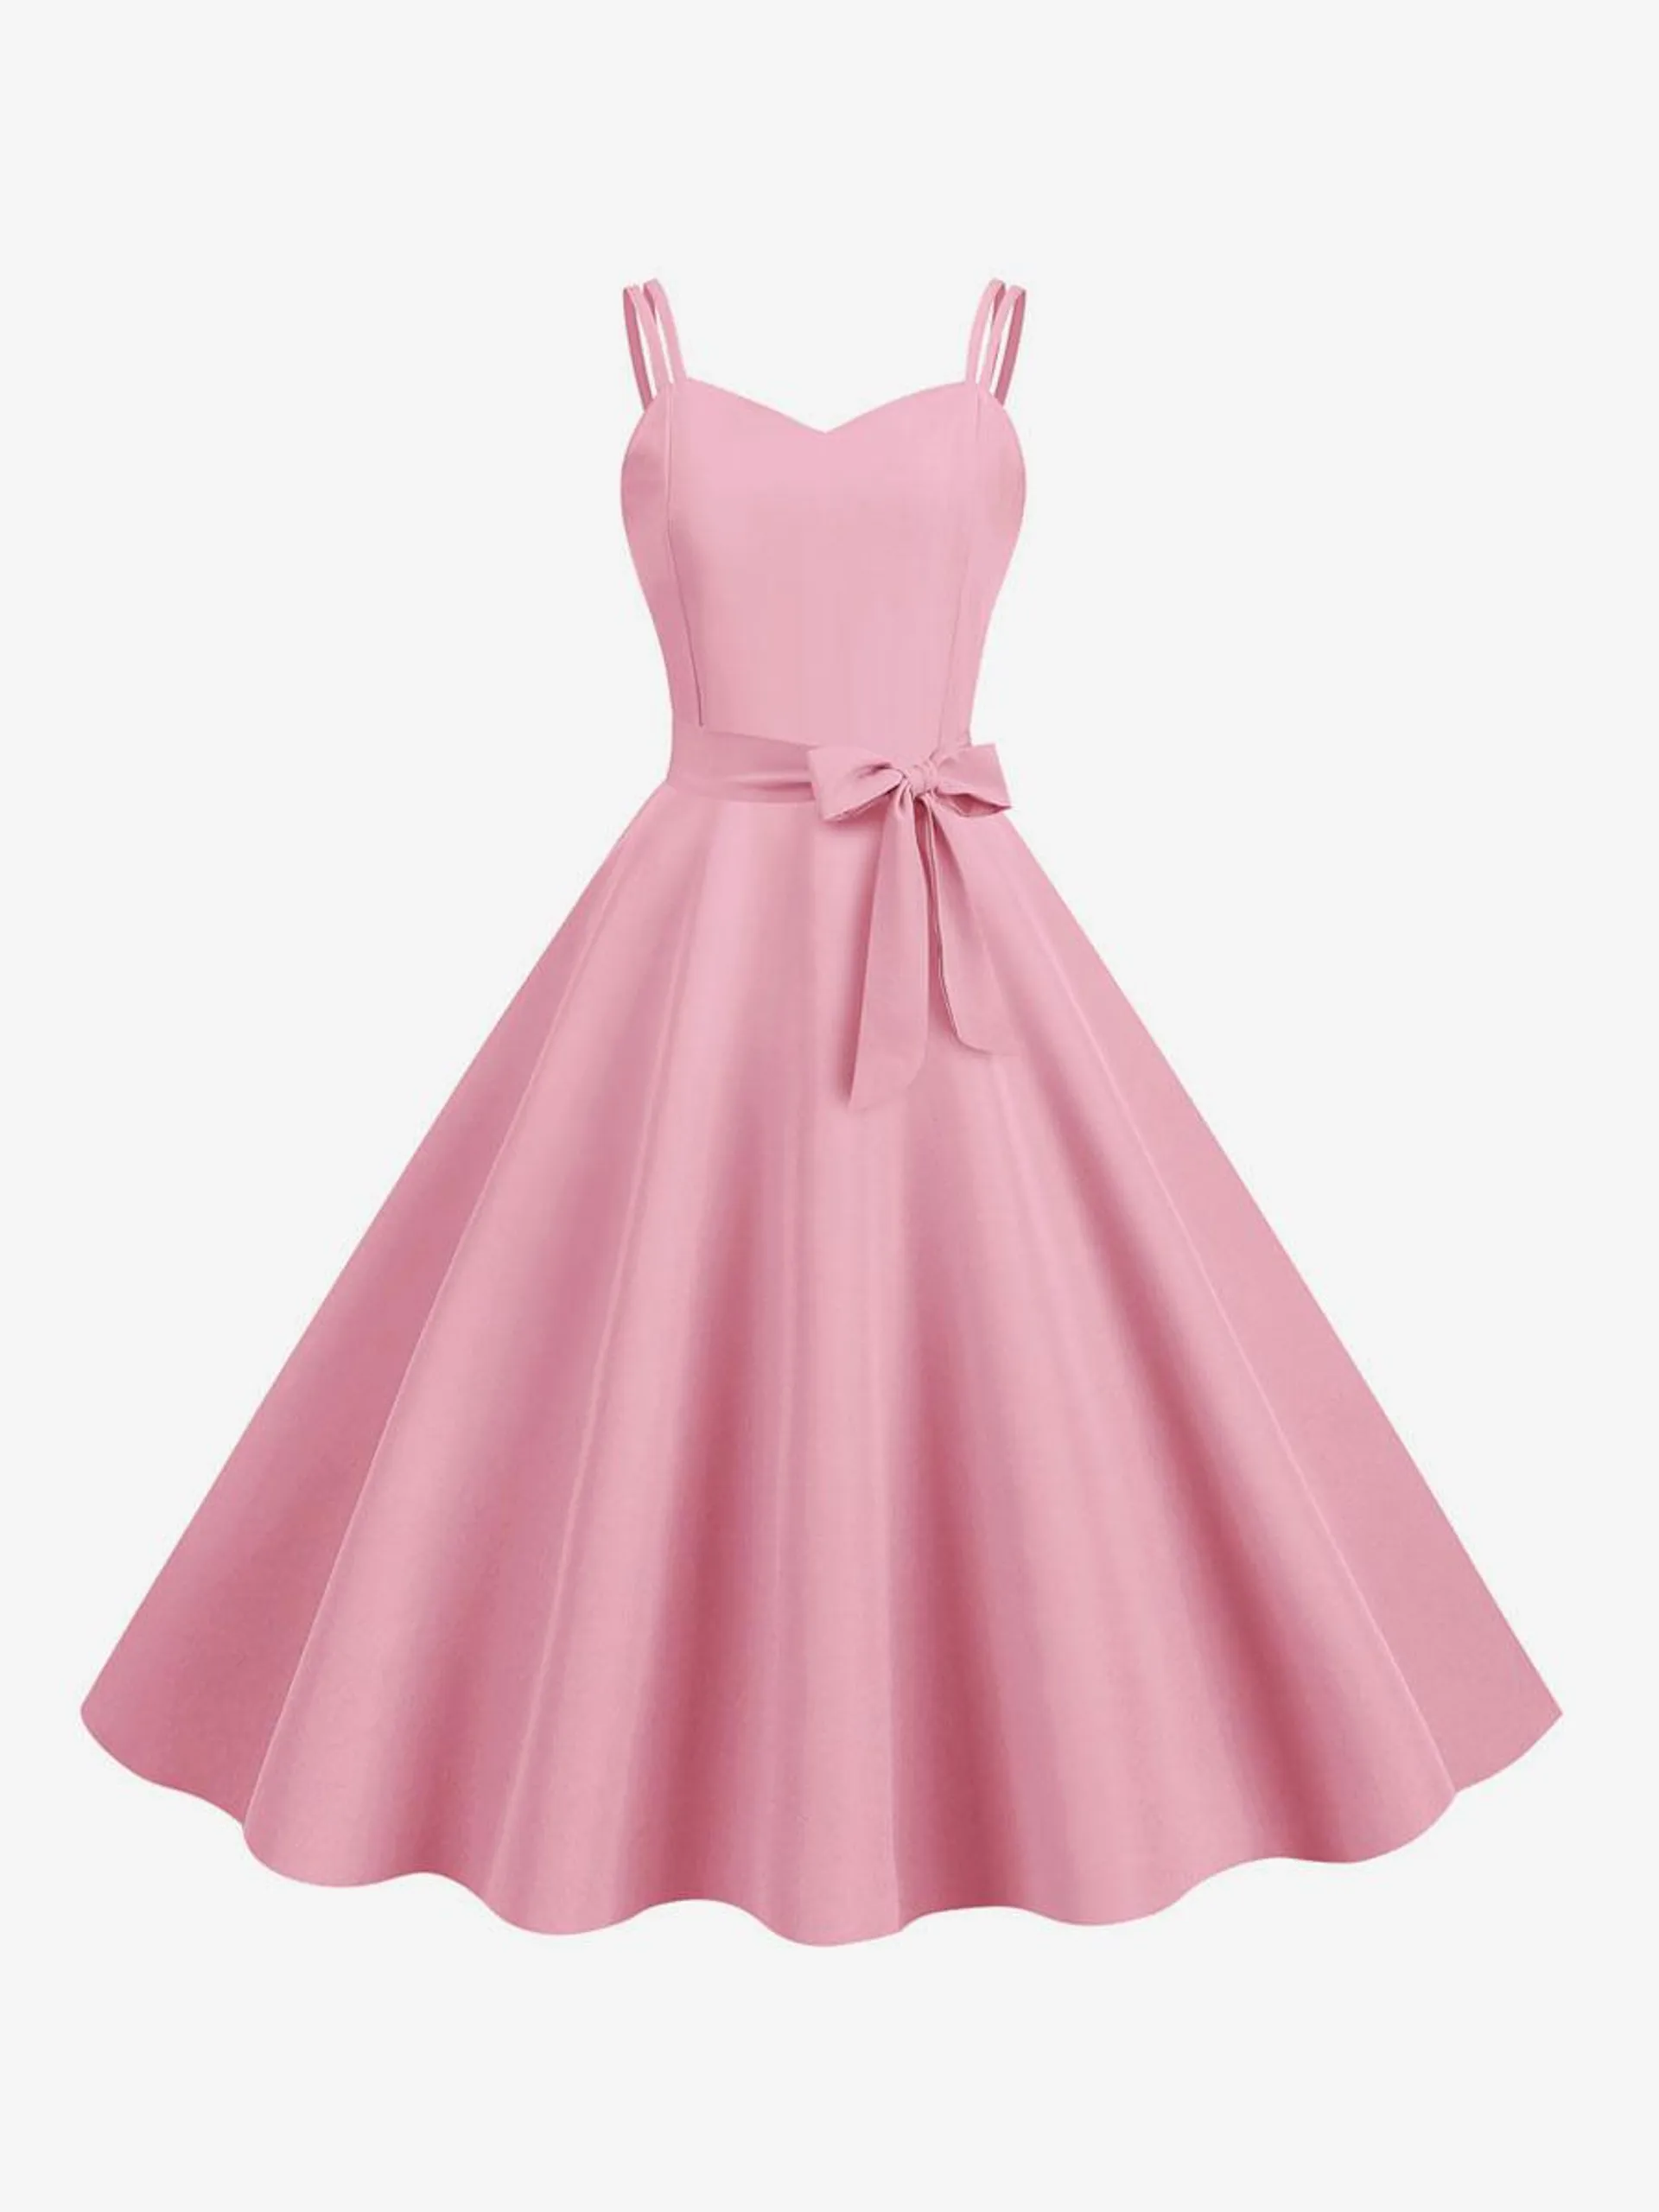 Retro Dress 1950s Sweetheart Neck Sash Sleeveless Medium Rockabilly Dress